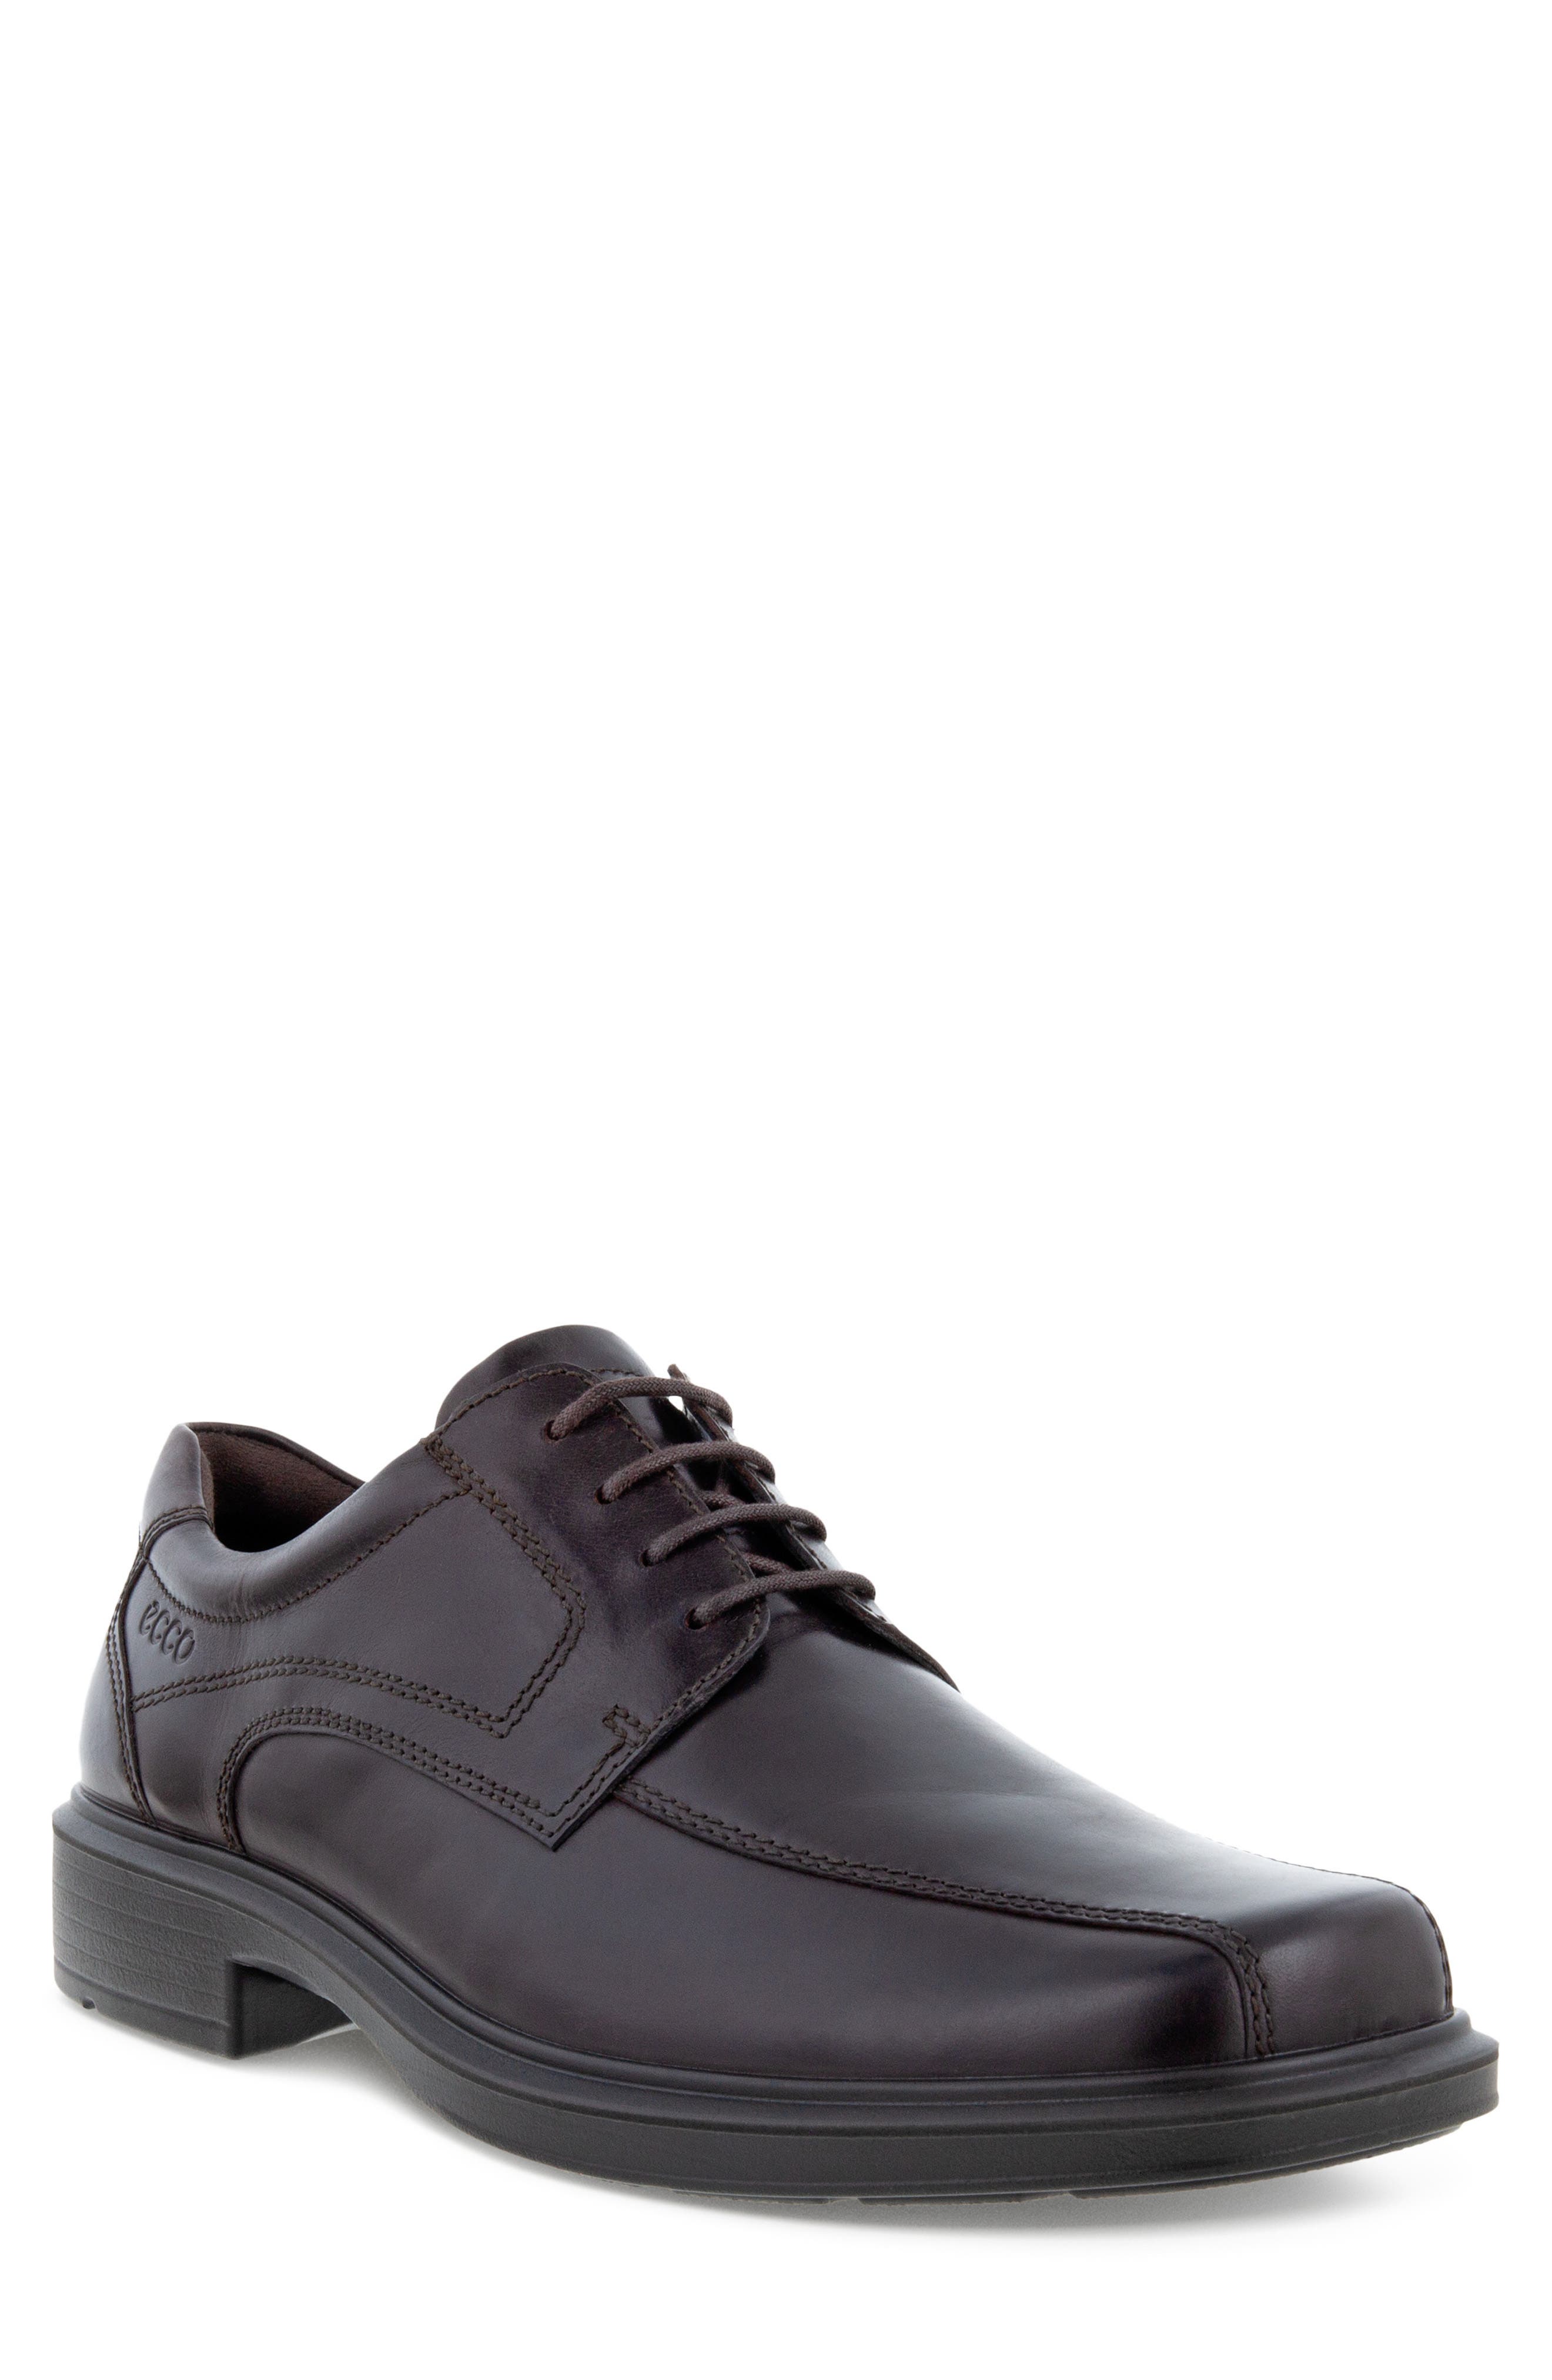 Mens Tan Black Leather Lined Slip On Smart Formal Shoes Size 6 7 8 9 10 11 12 13 